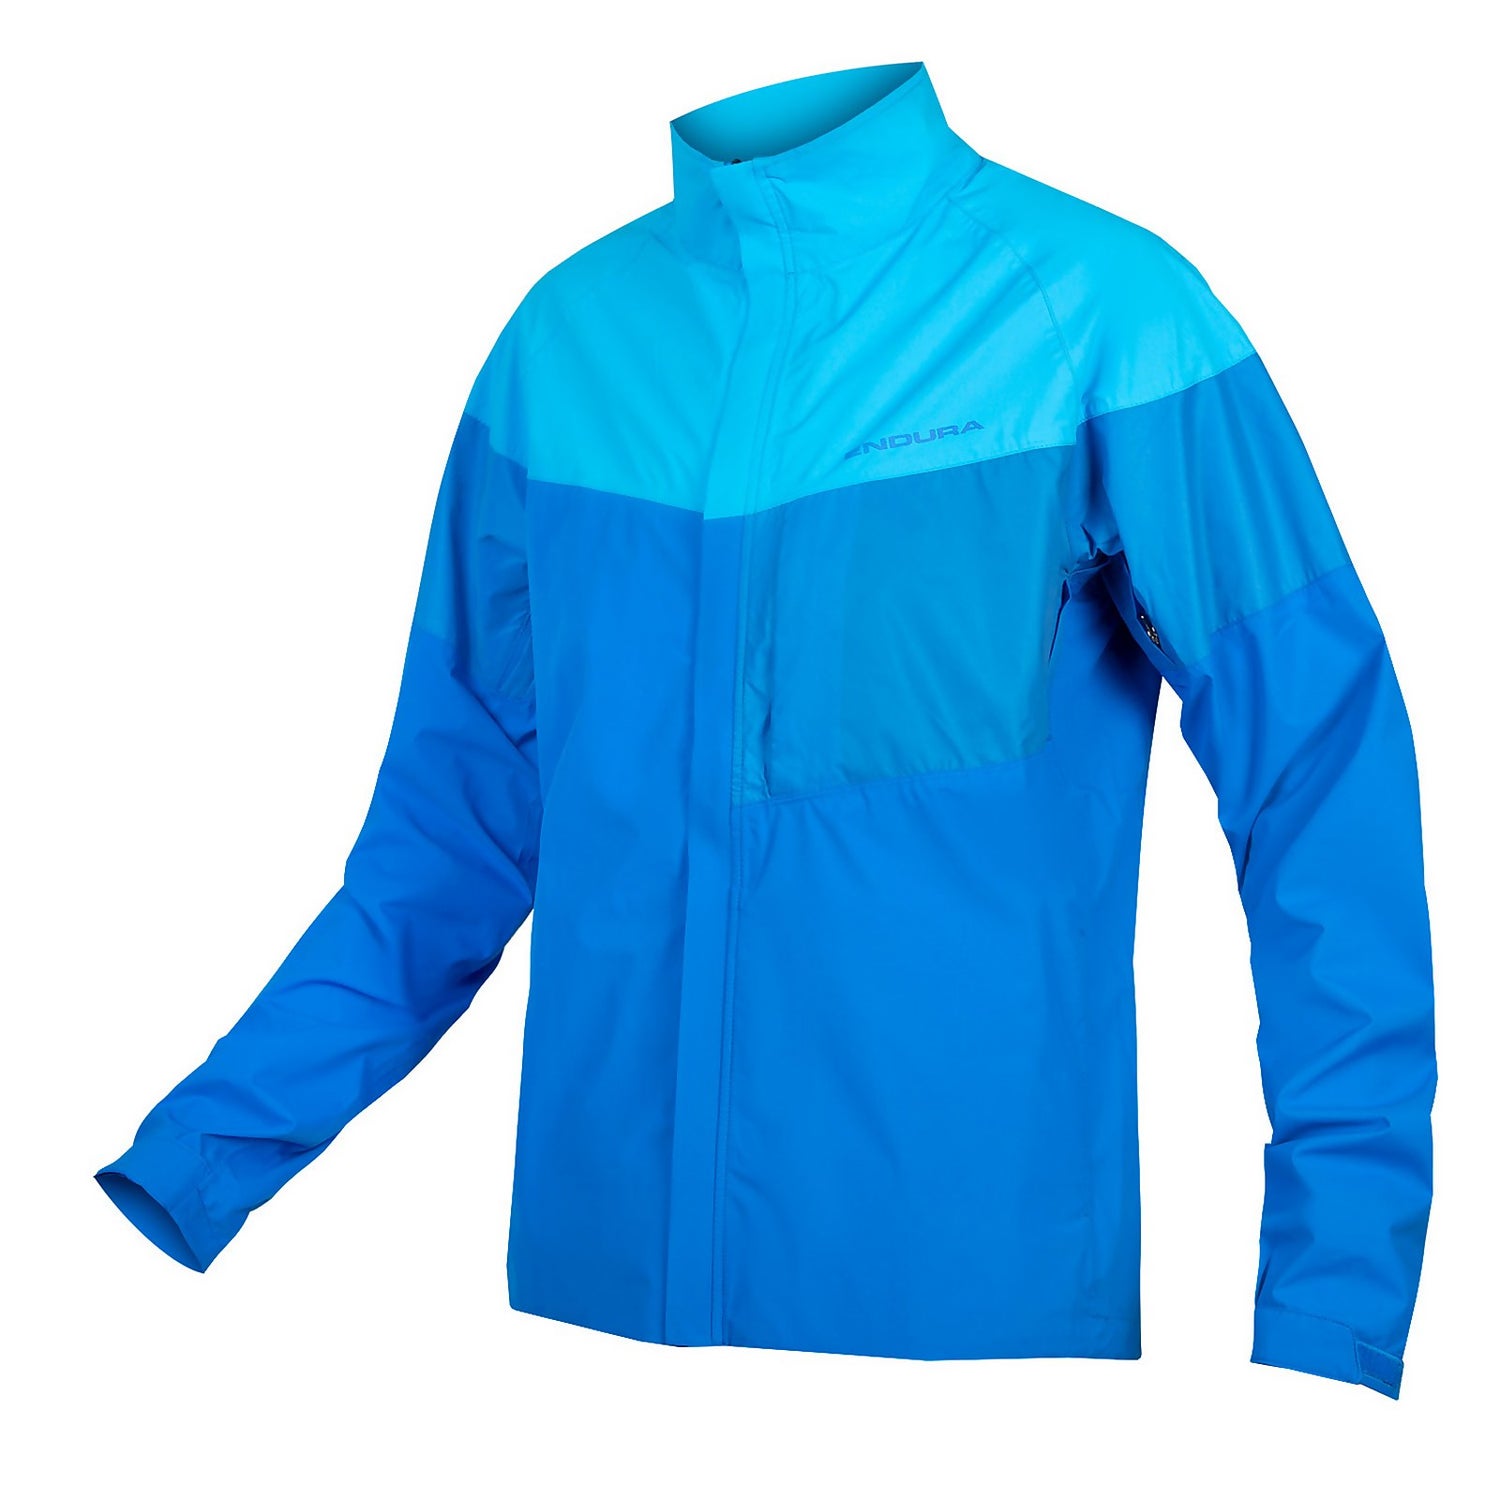 Men's Urban Luminite Jacket II - High-Viz Blue - XXXL